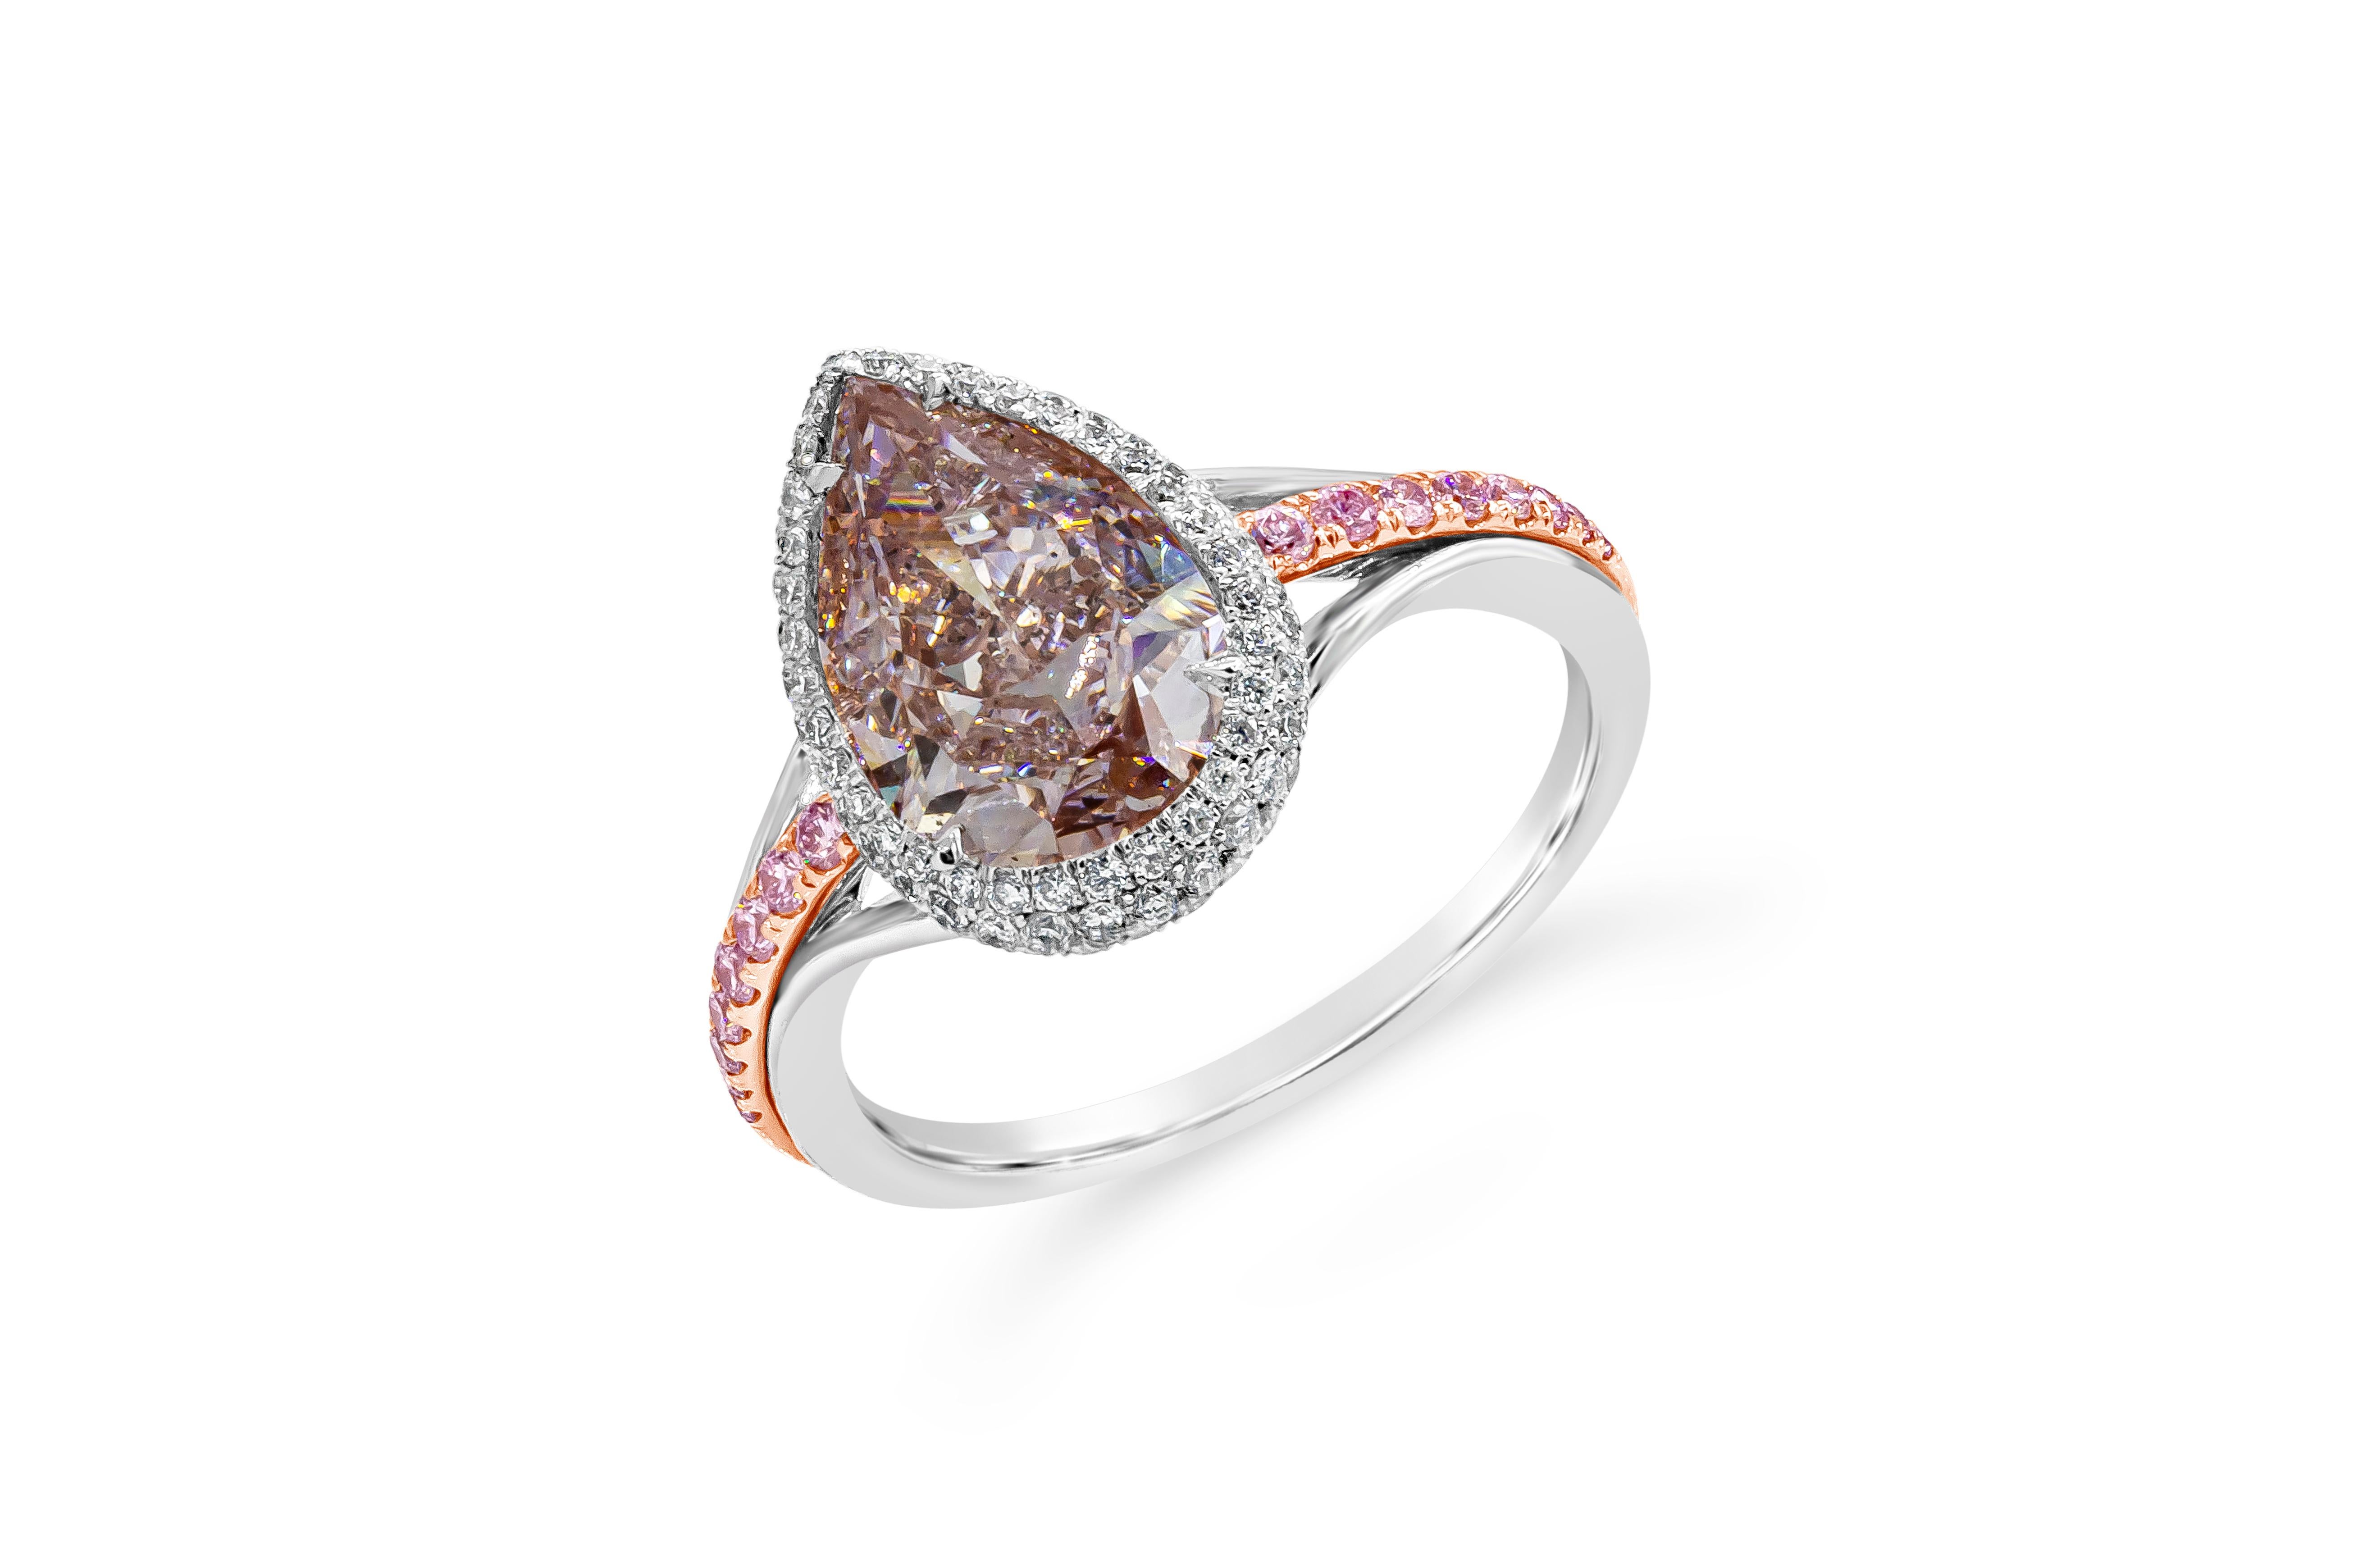 Women's Roman Malakov GIA Certified 3.04 Carat Pear Shape Pink Diamond Halo Ring